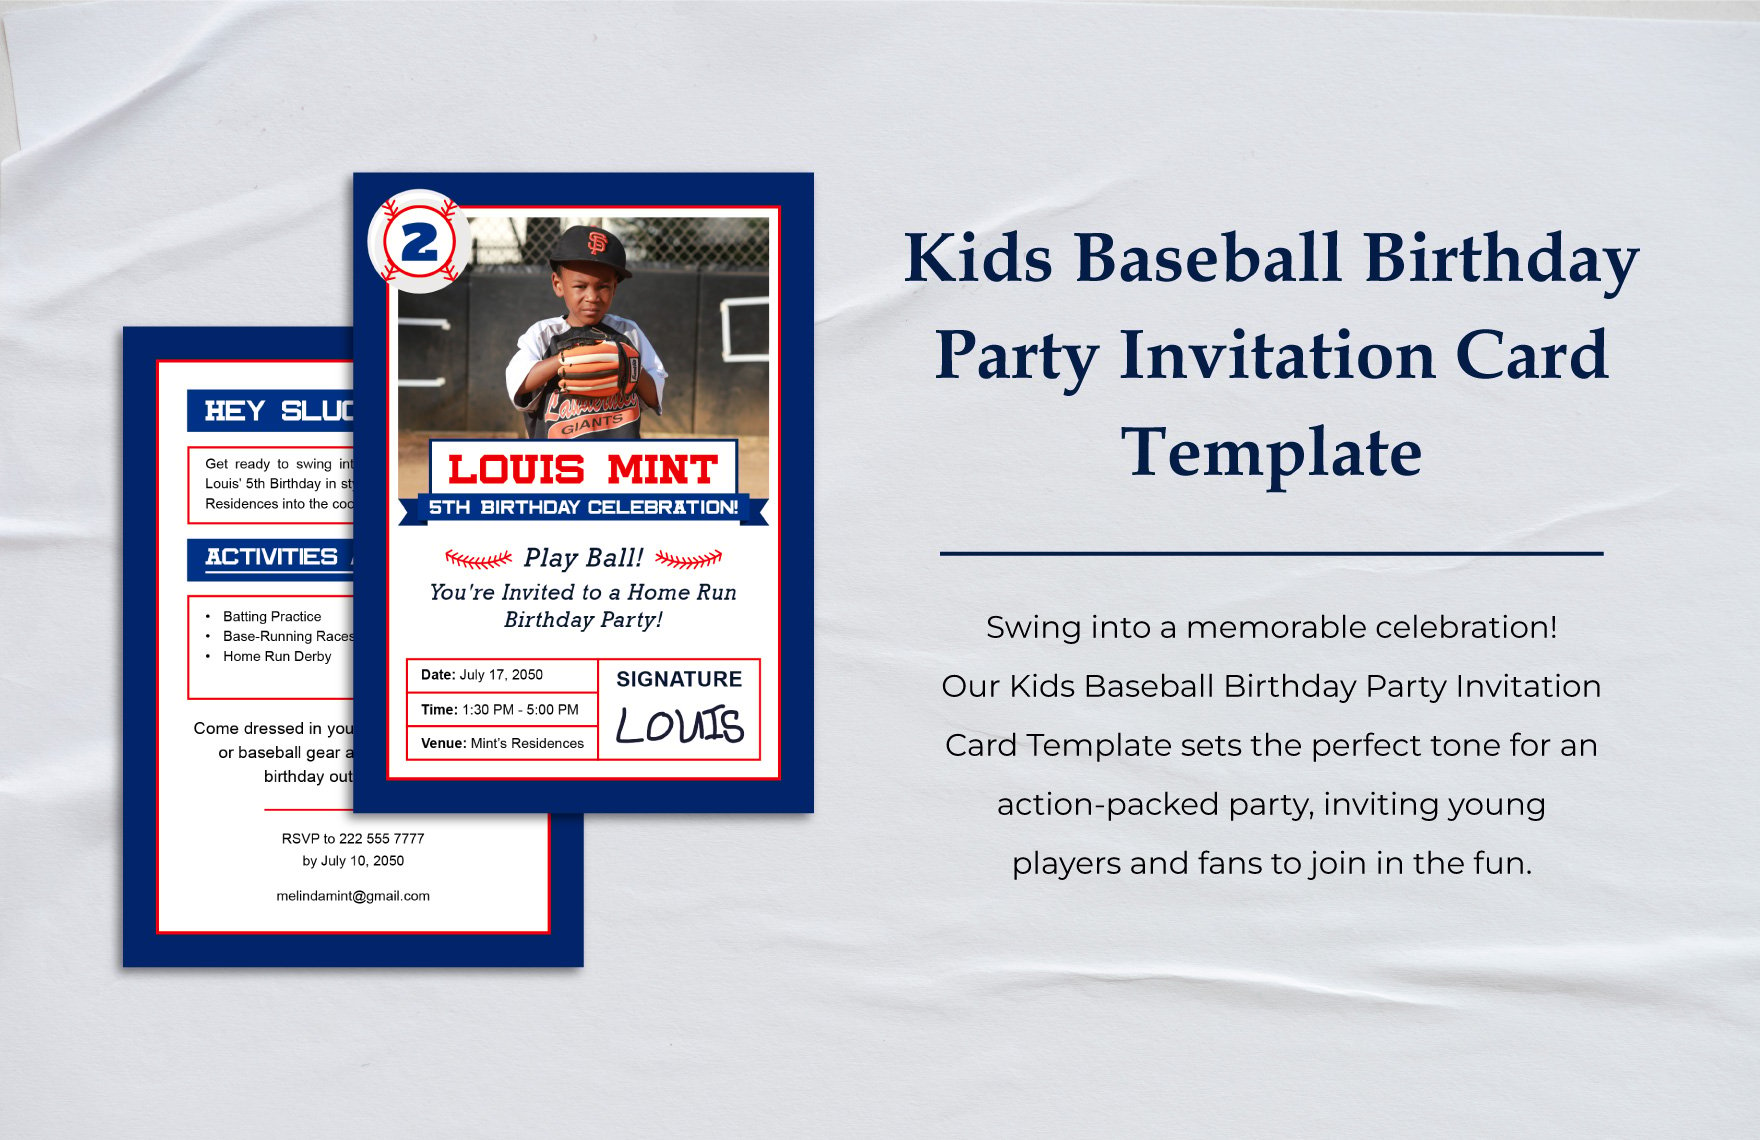 Kids Baseball Birthday Party Invitation Card Template